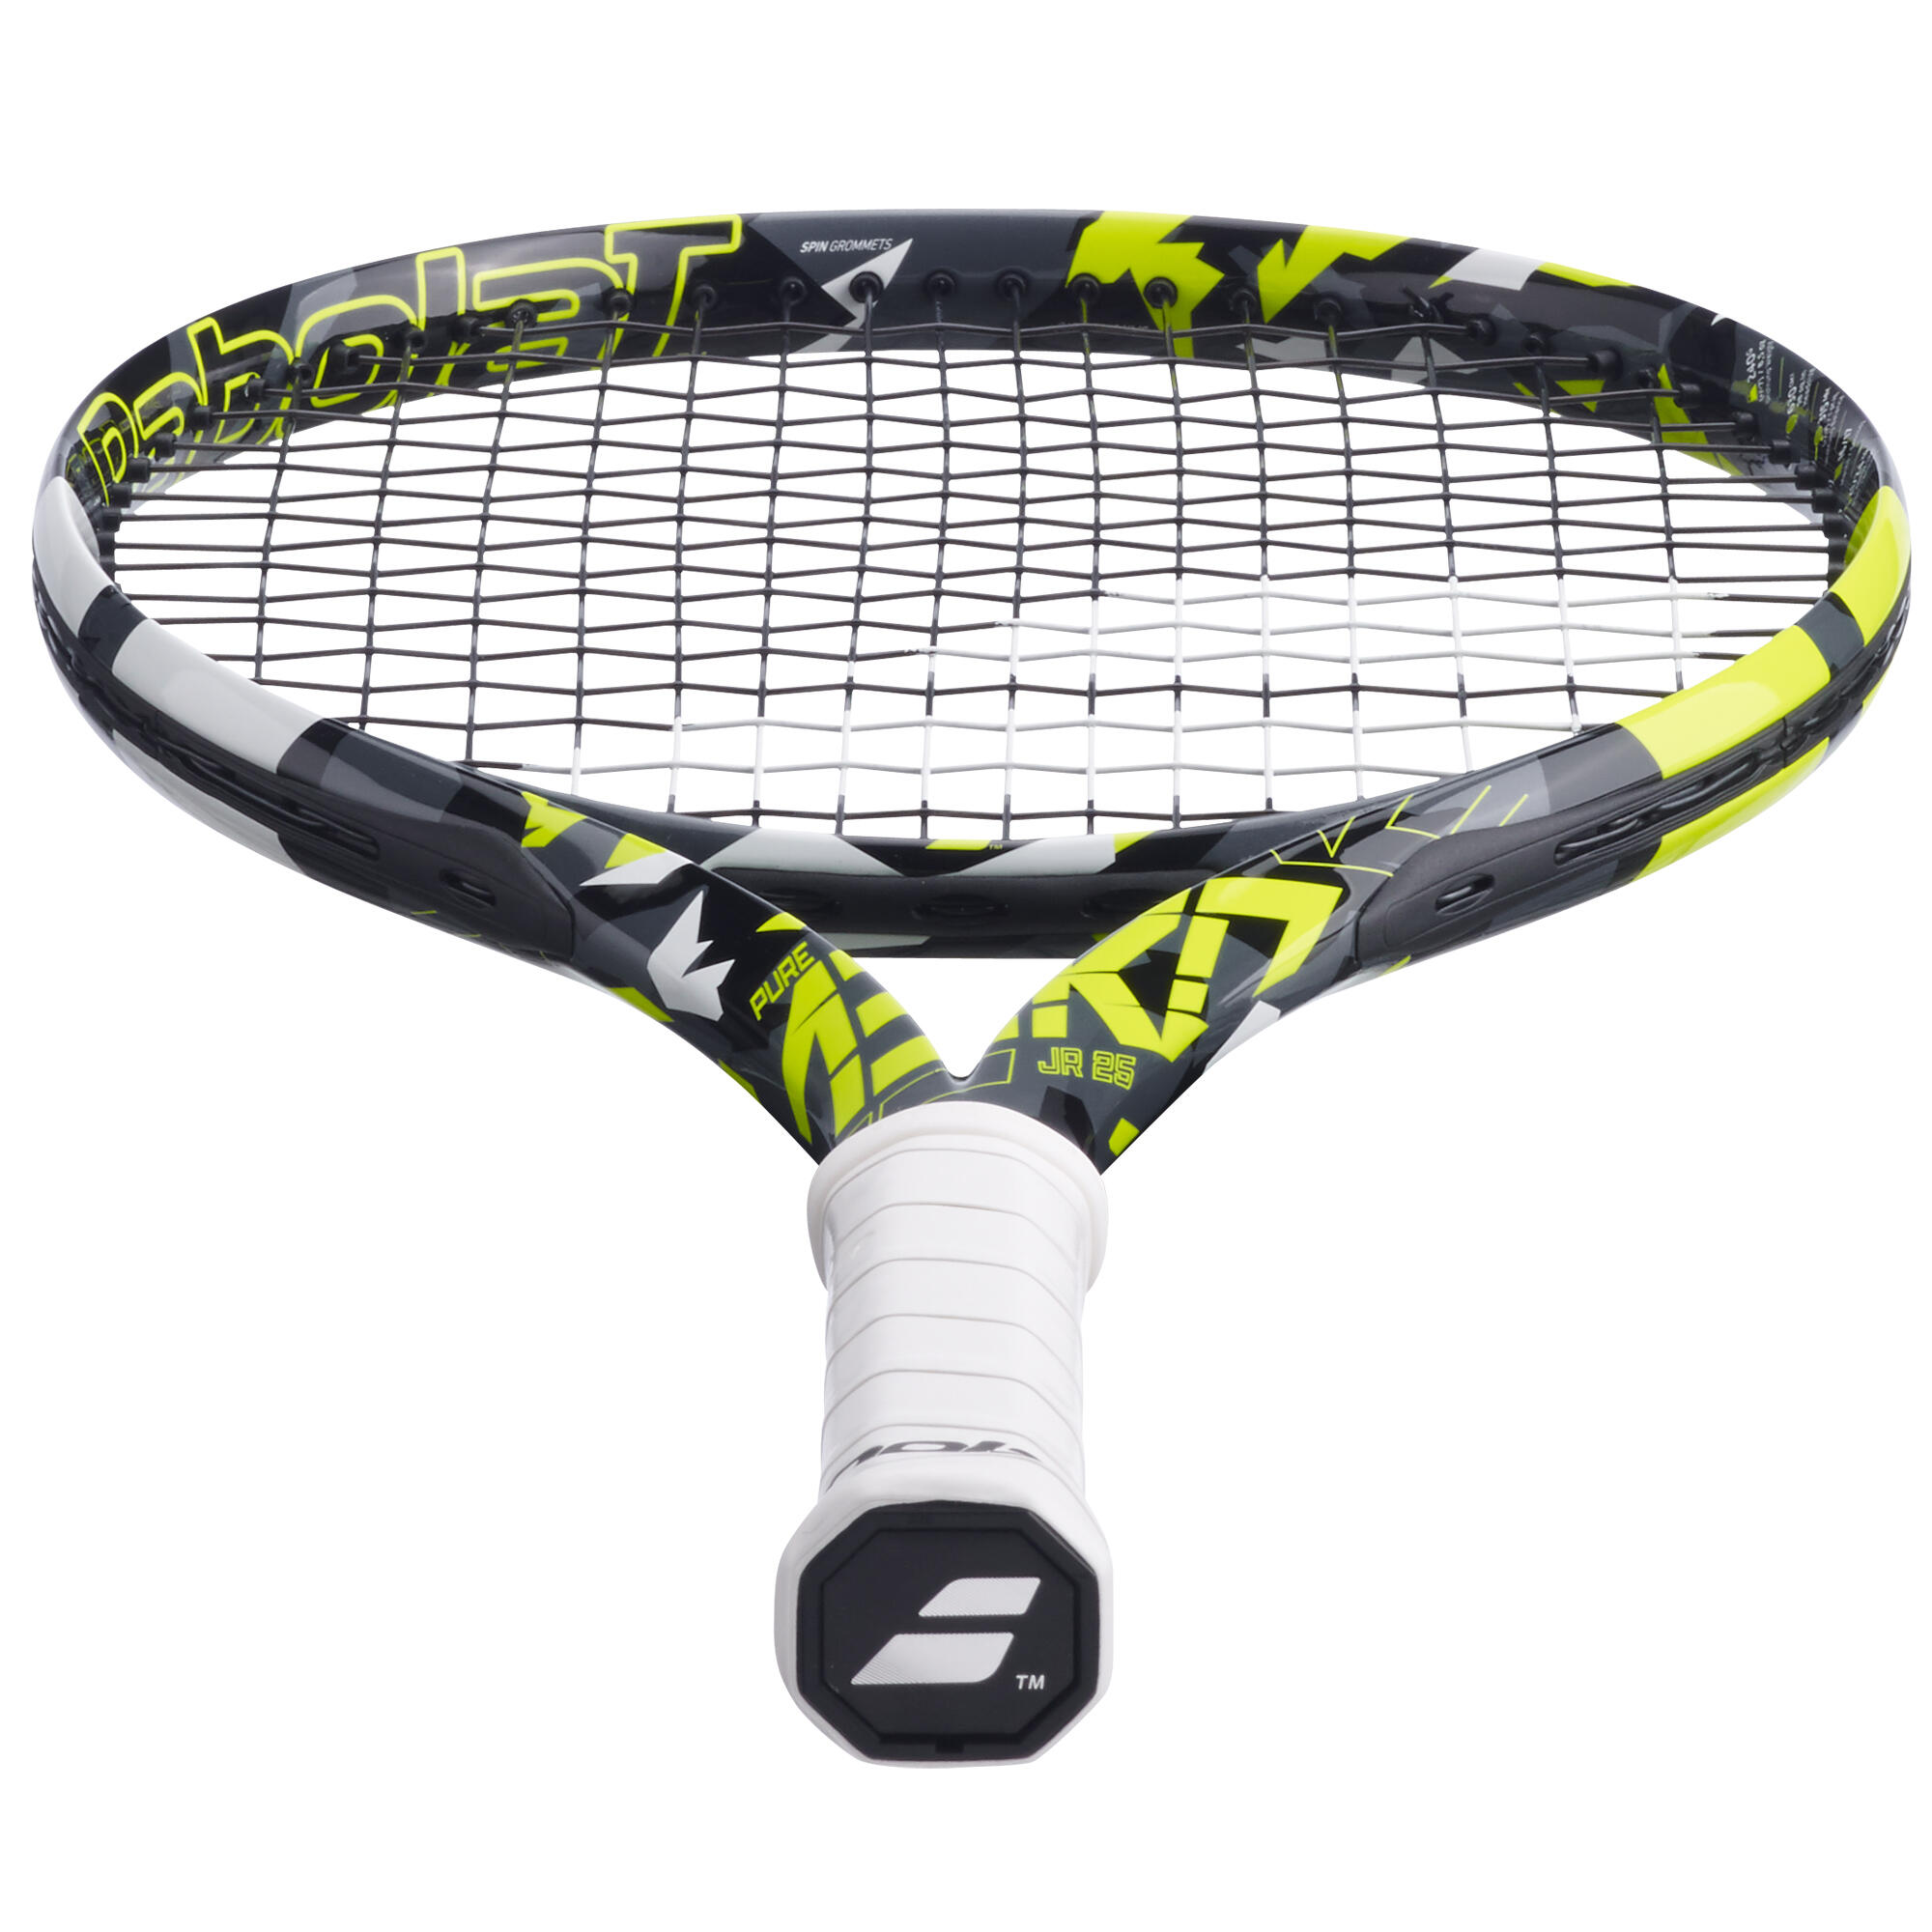 Pure Aero 25 Kids' Tennis Racket - Black/Yellow 5/7